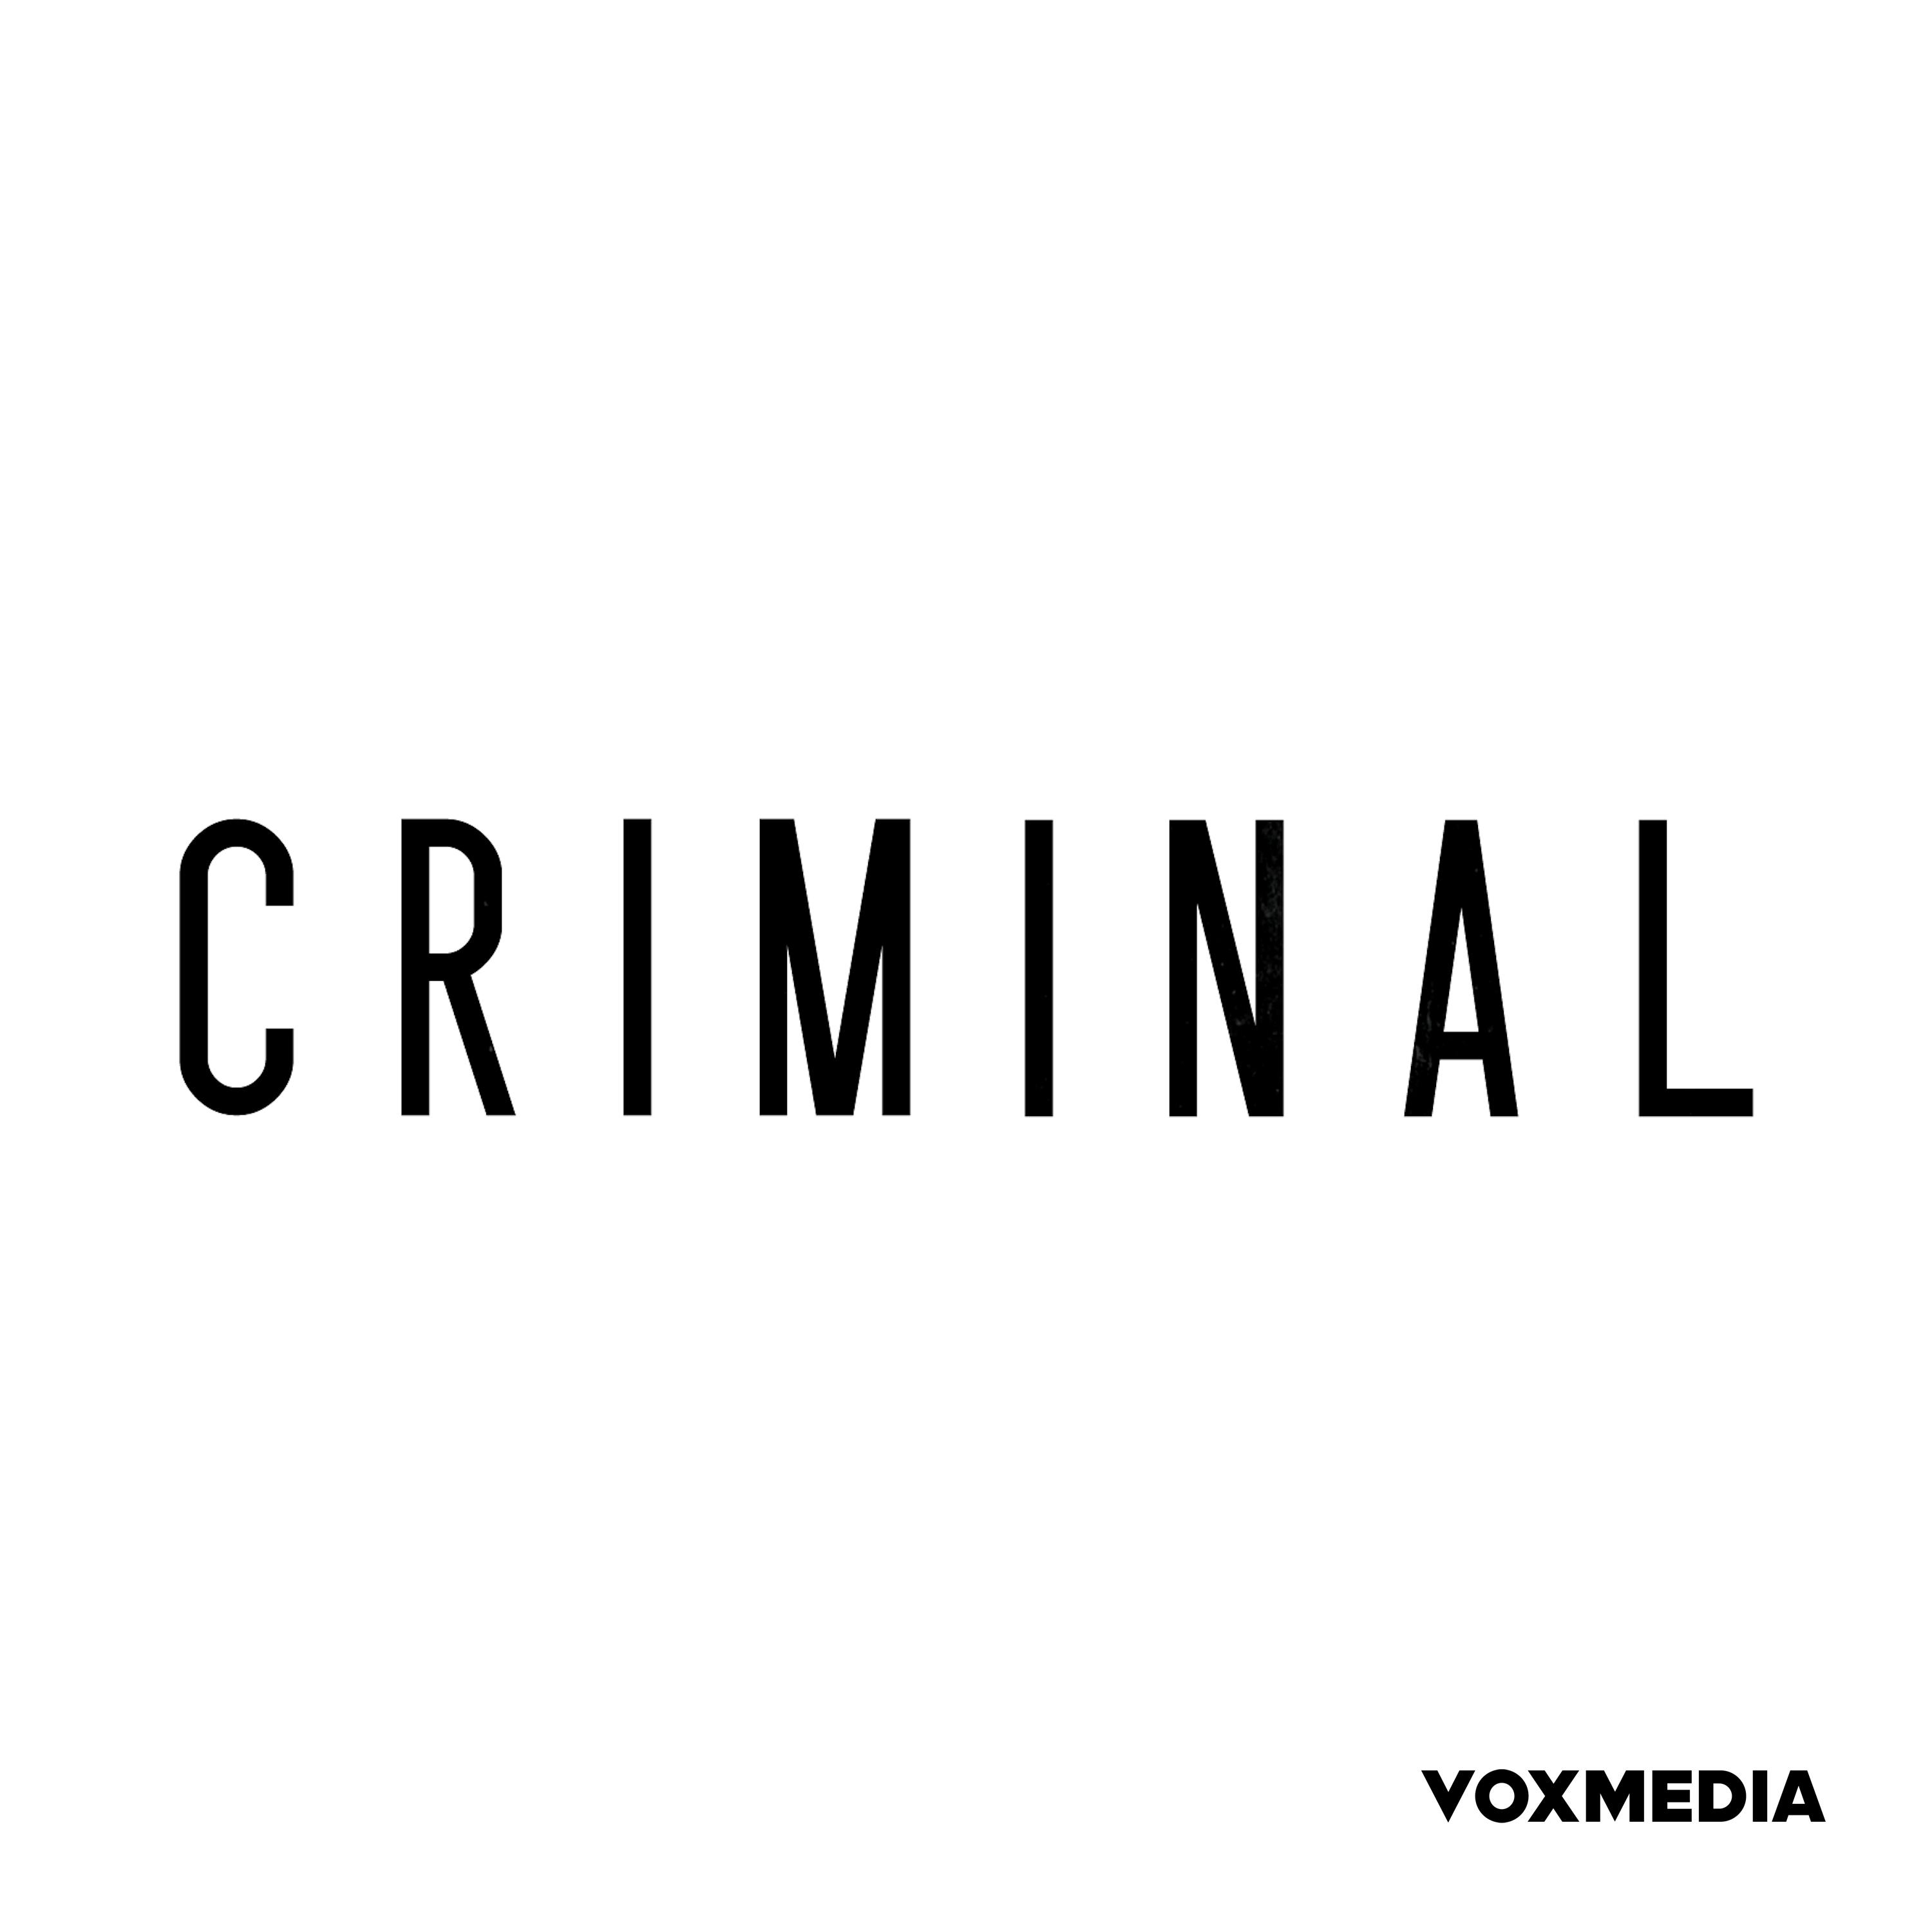 Criminal Listen on Podurama podcasts